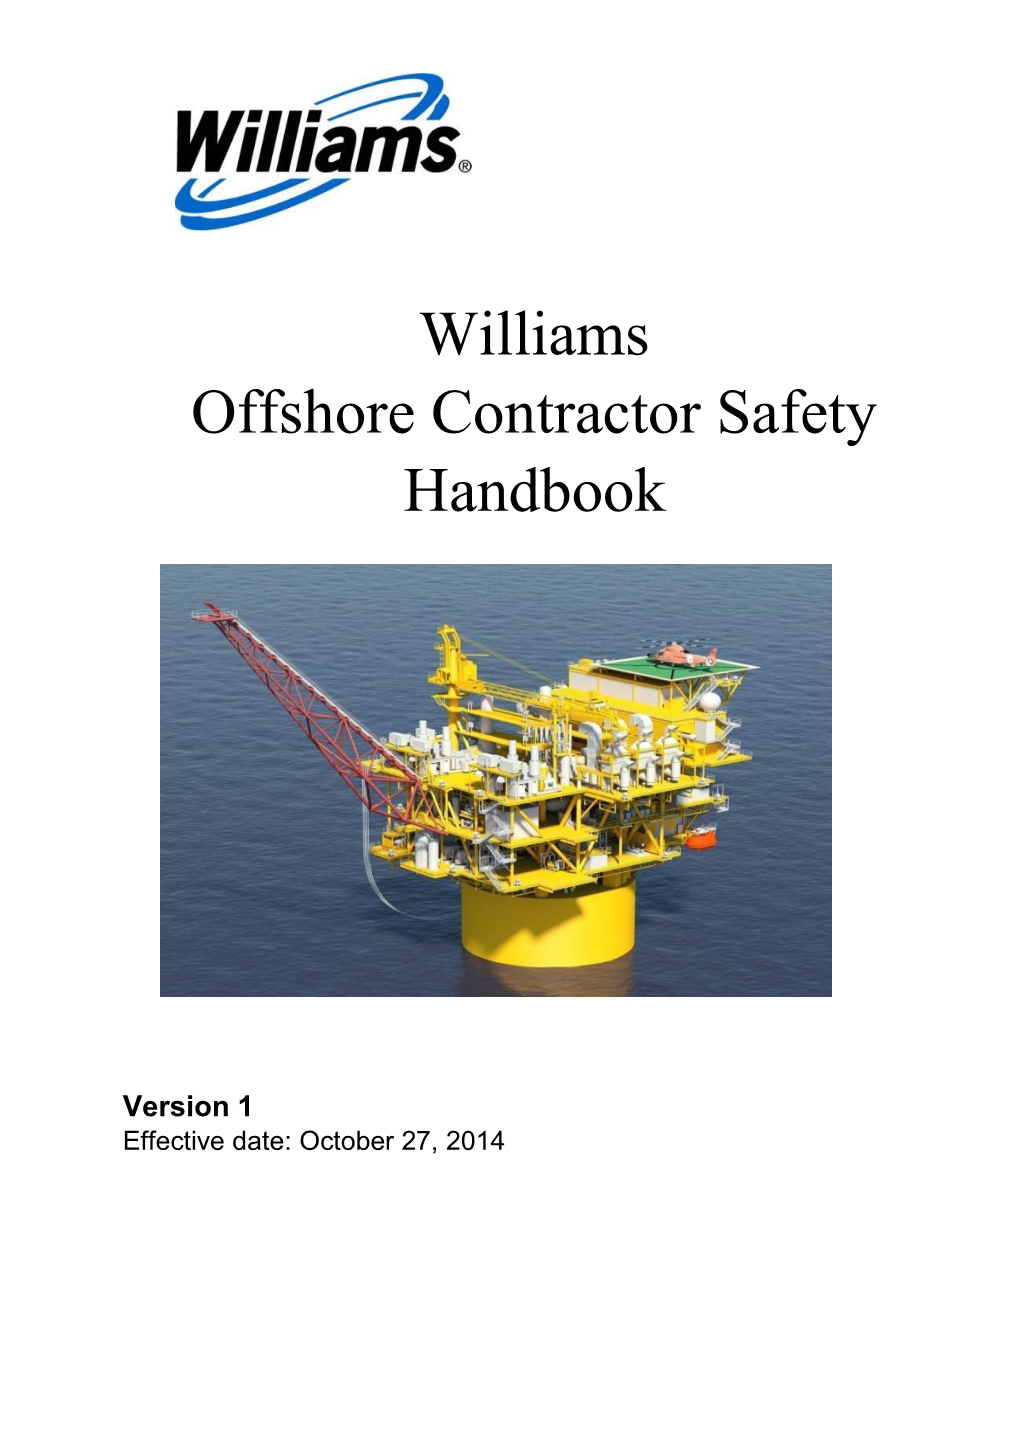 Williams Offshore Contractor Safety Handbook 27 October 2014